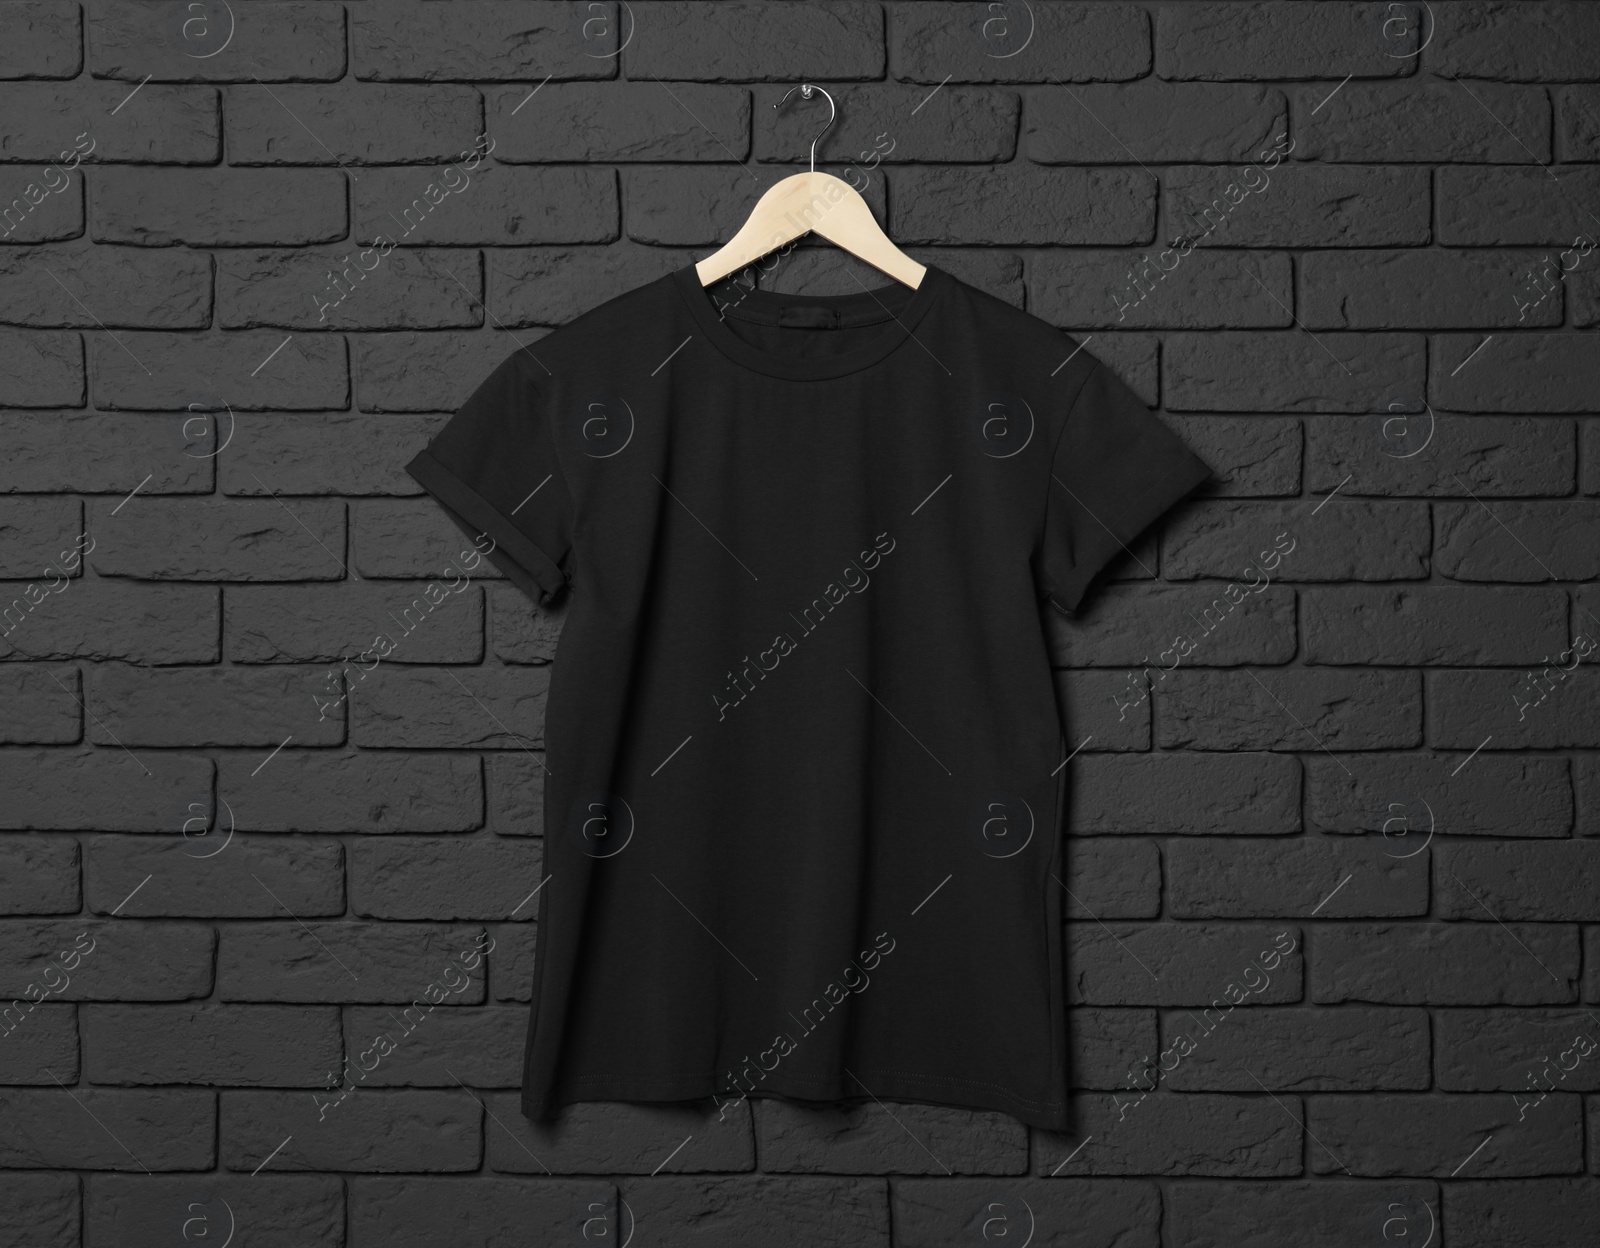 Photo of Hanger with stylish T-shirt on black brick wall